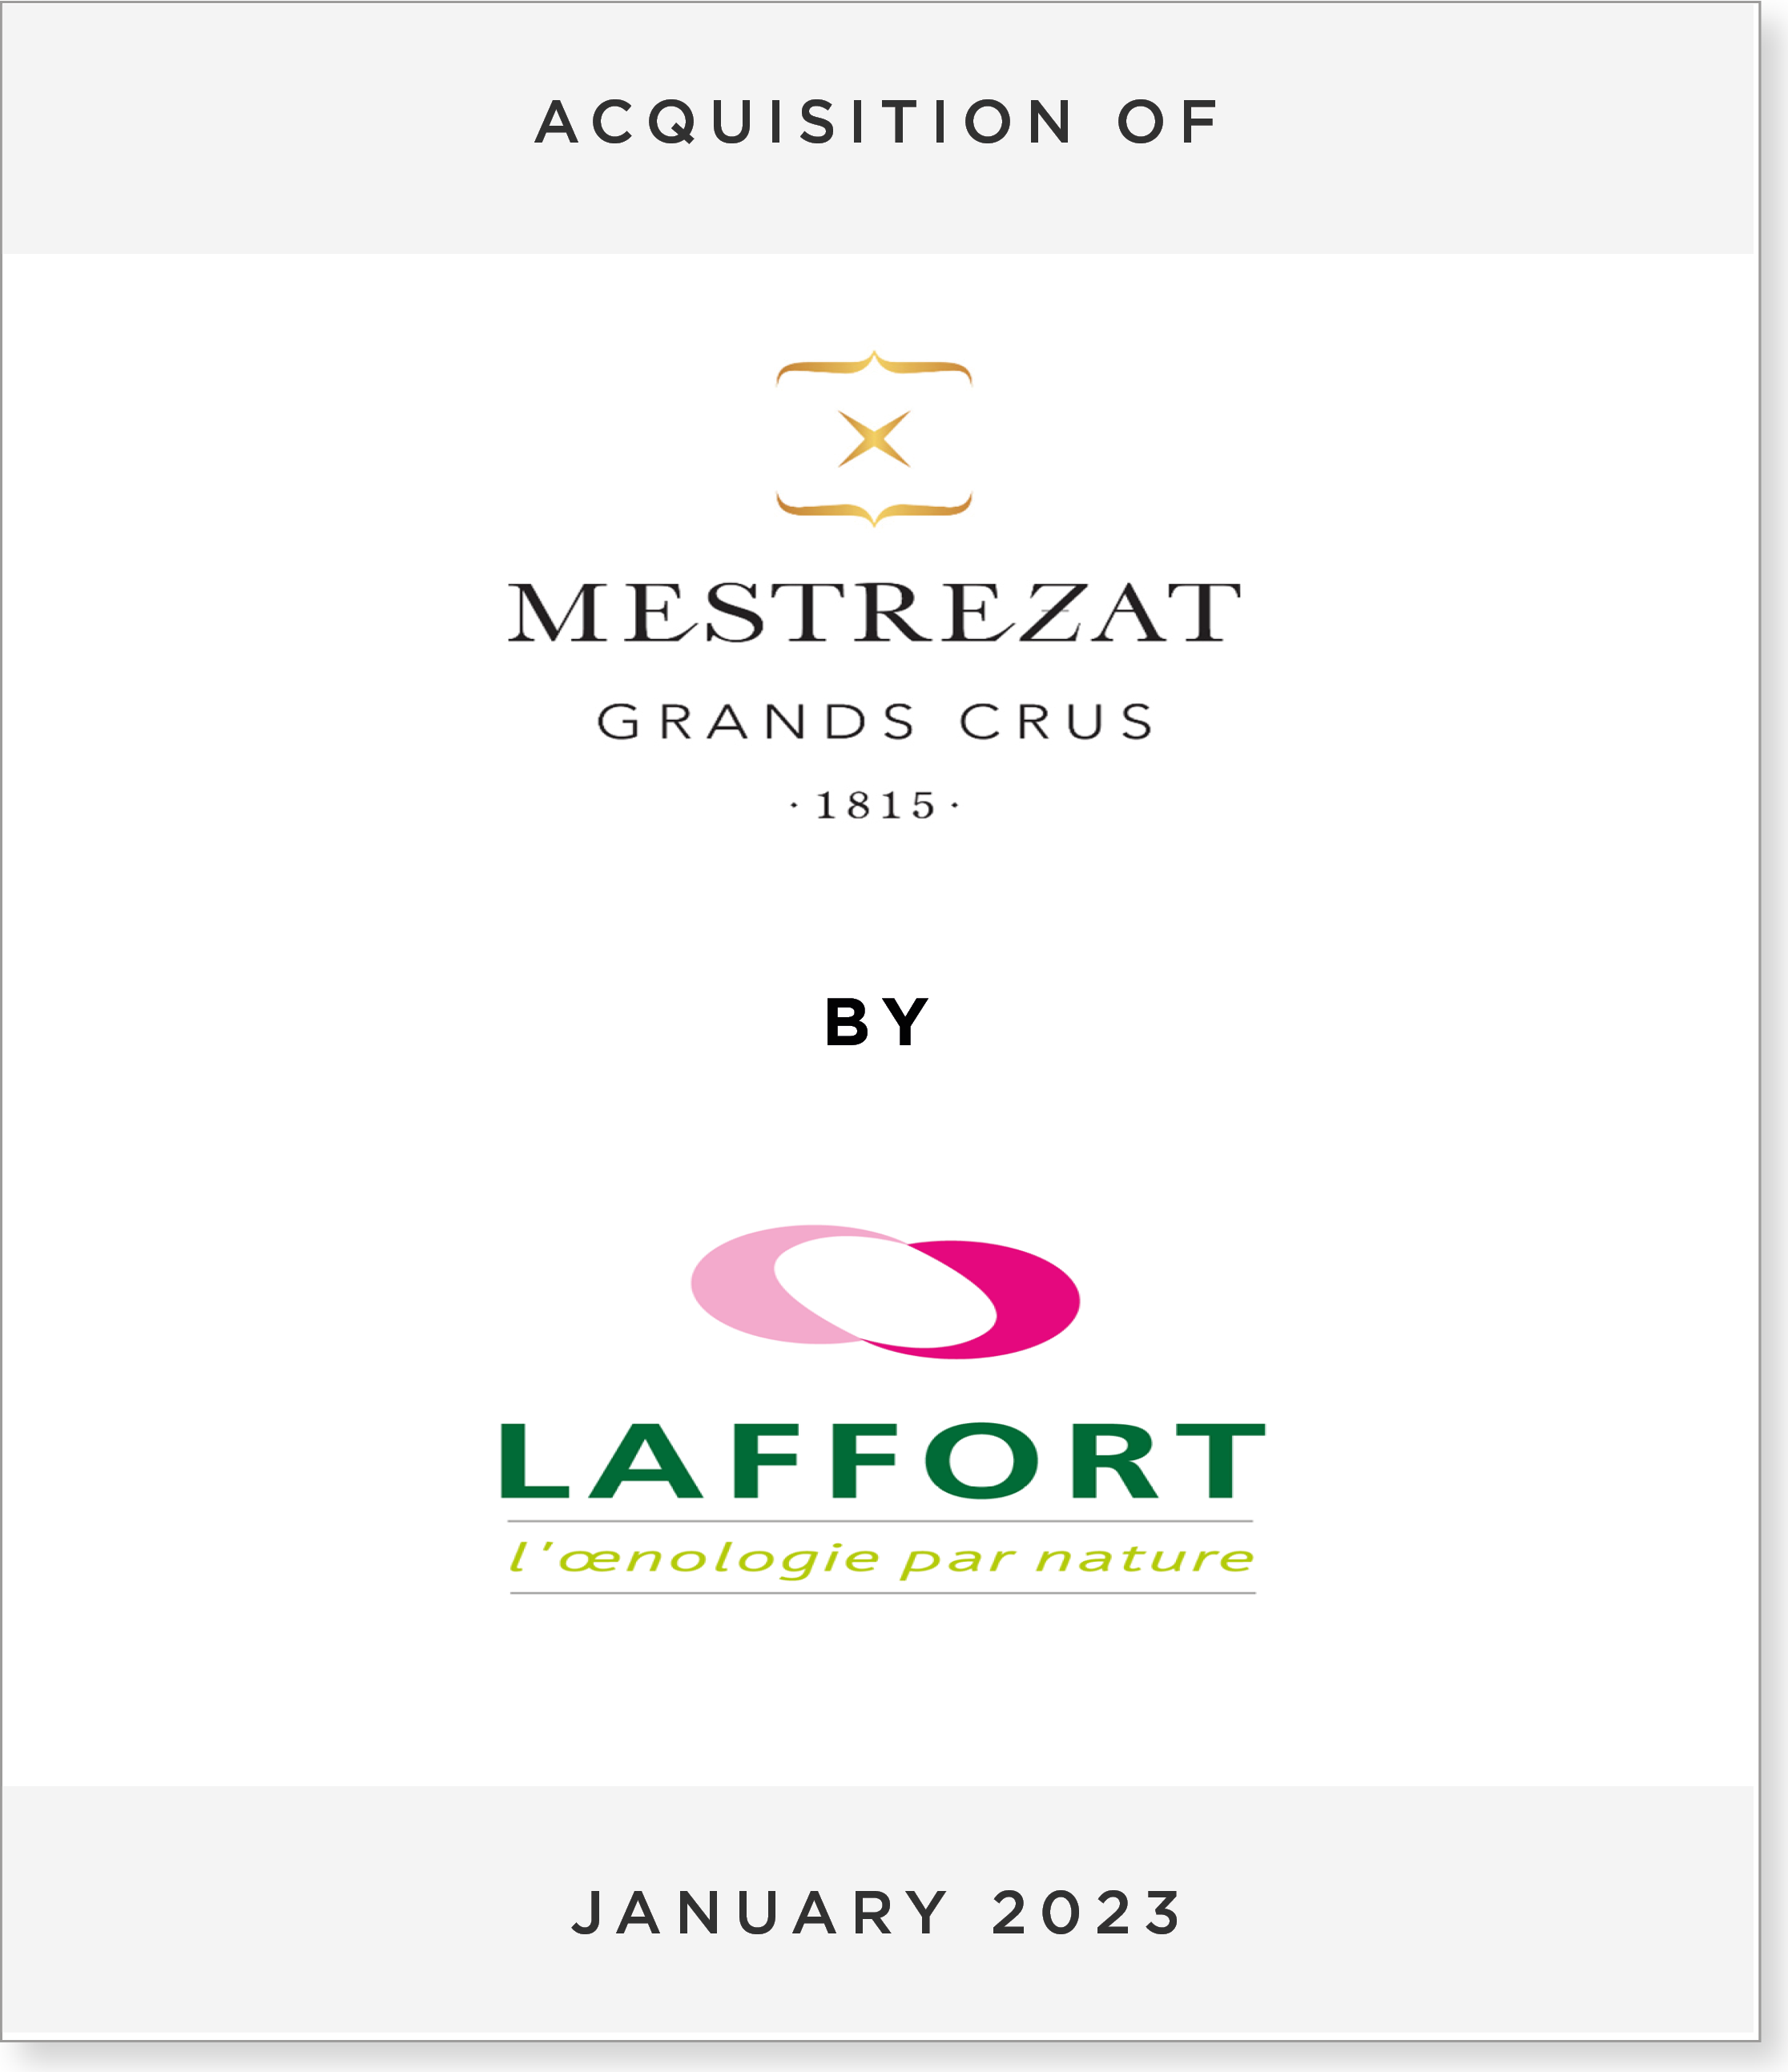 Mestrezat_Laffort- Acquisition of Mestrezat Grand Crus by Laffort